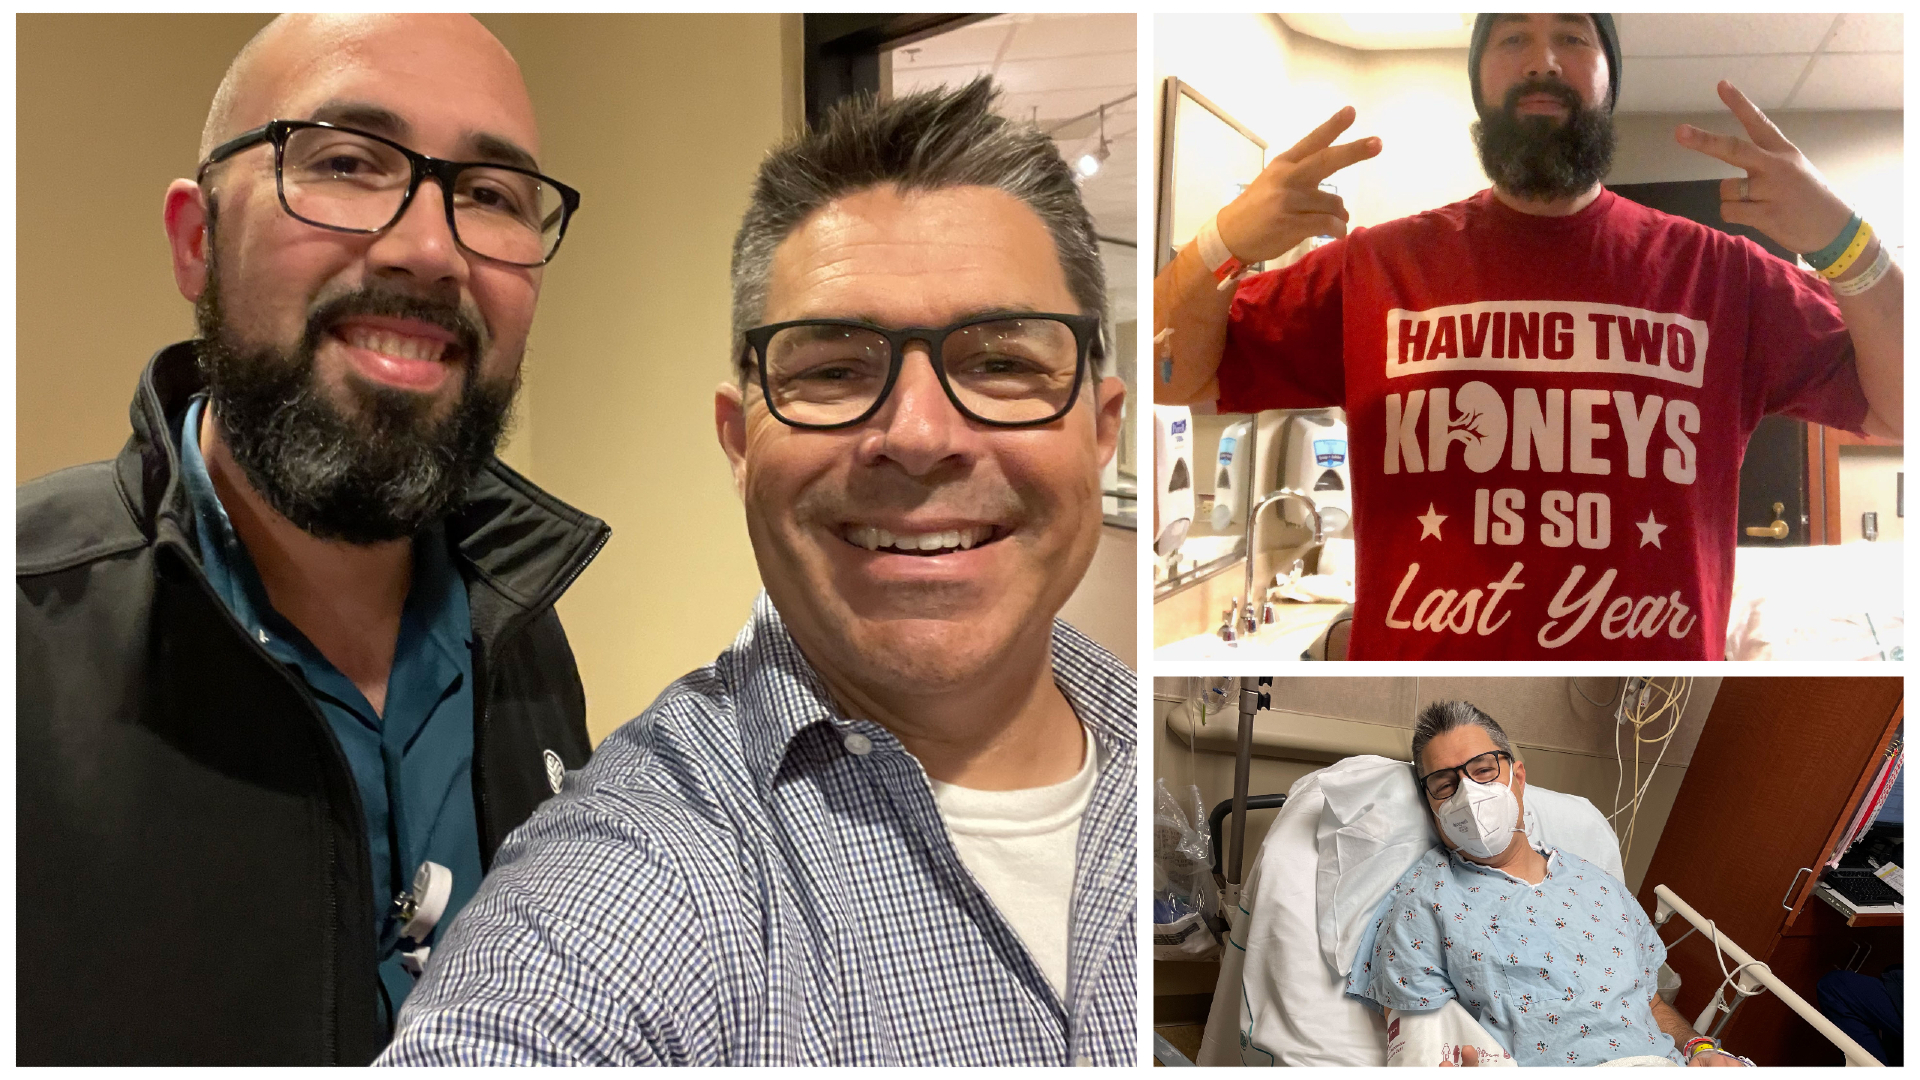 Atrium Health teammate, Chris, donates kidney to complete stranger in need, Steve